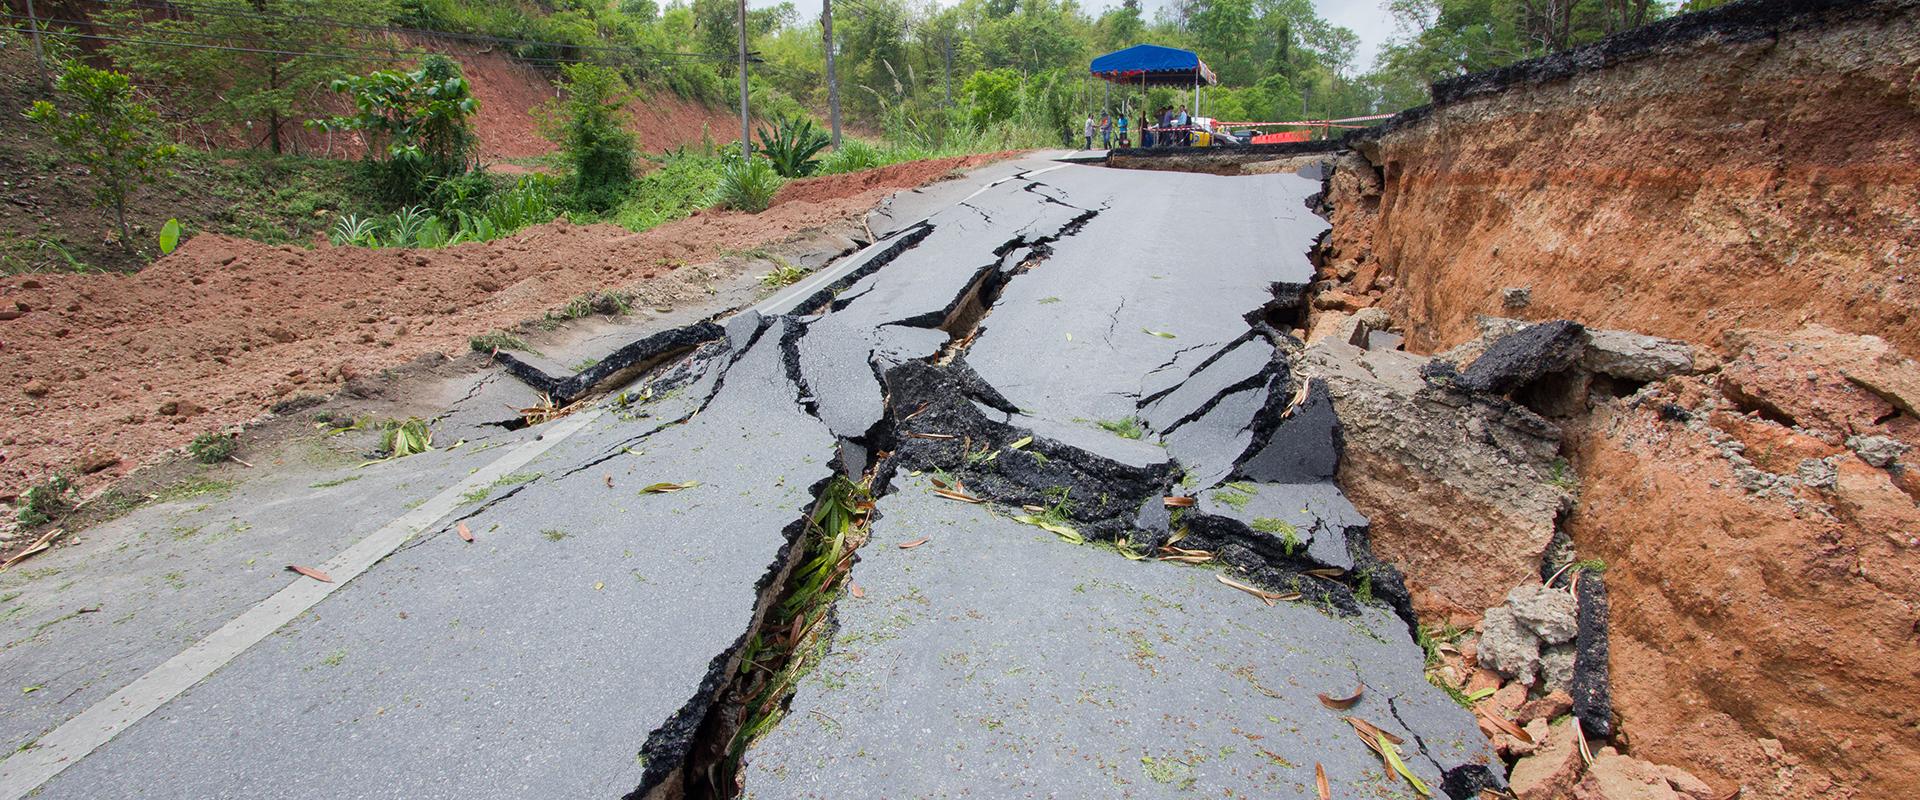 Road collapse, Thailand